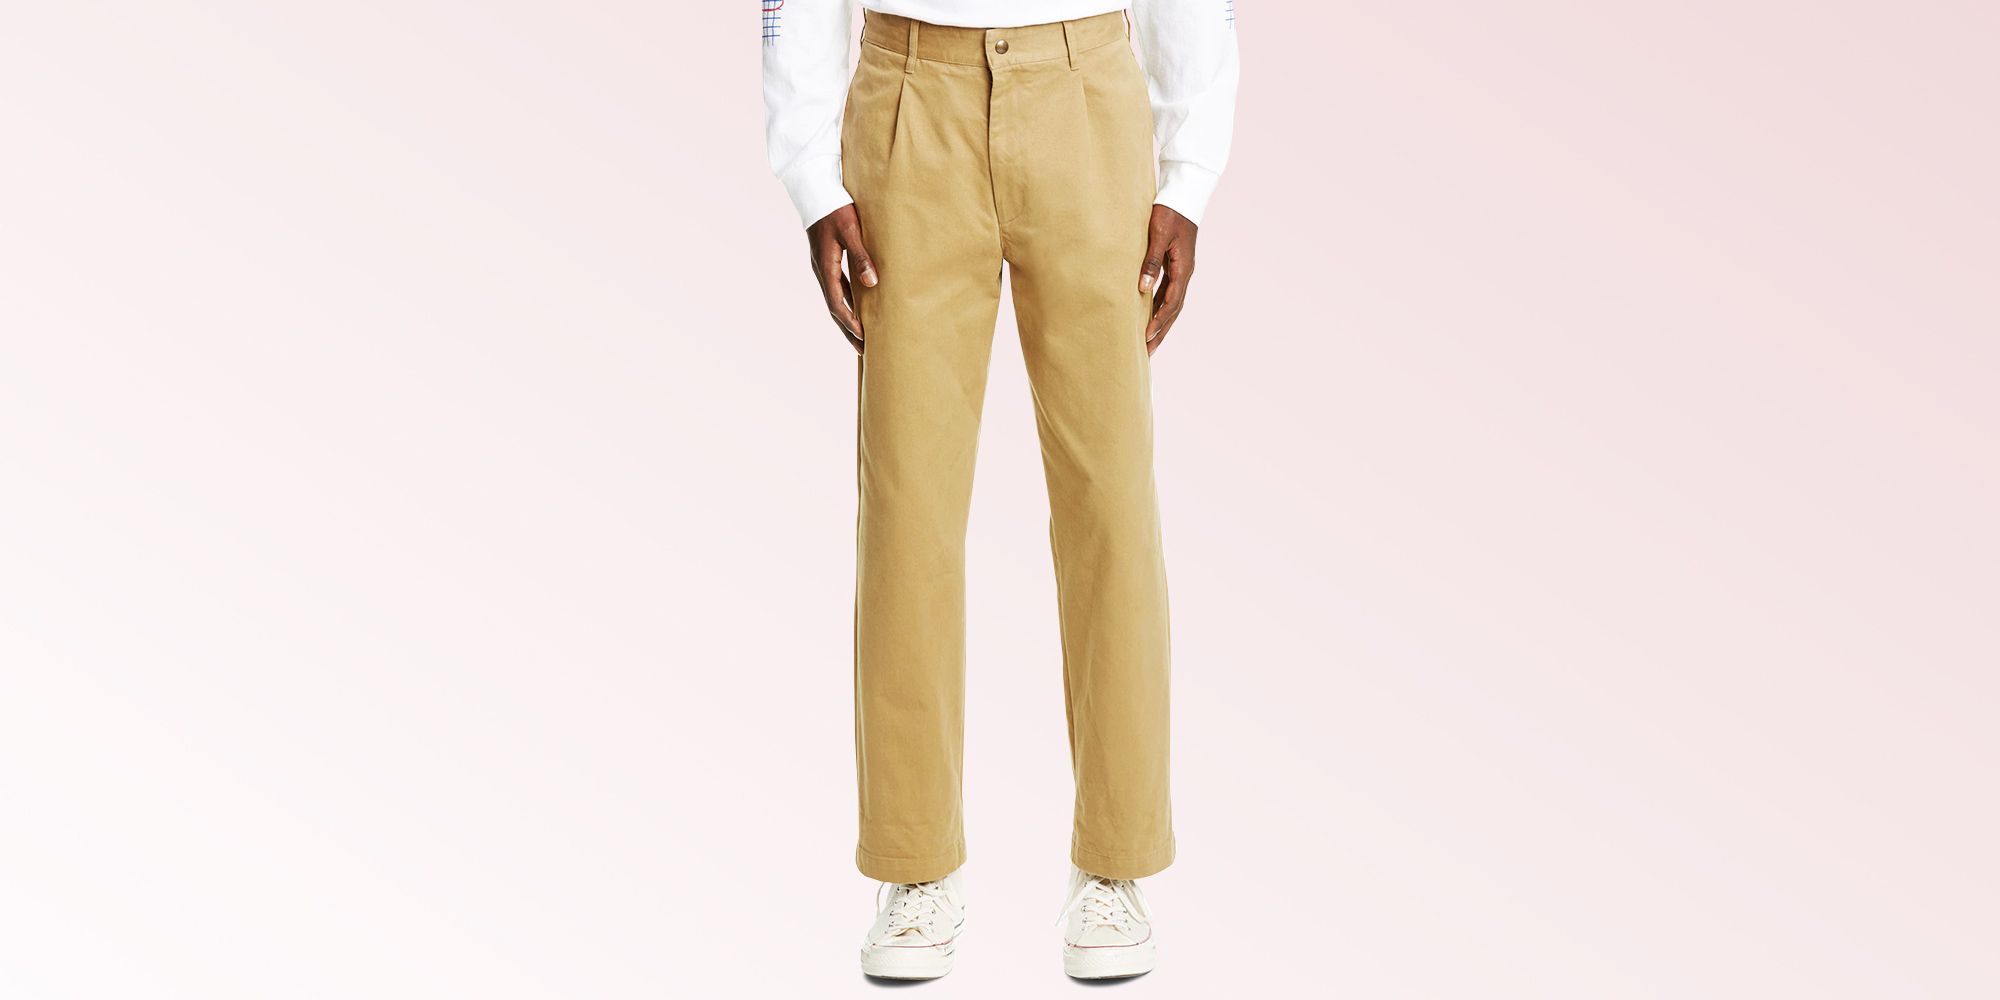 Buy Blue Trousers  Pants for Men by VAN HEUSEN Online  Ajiocom